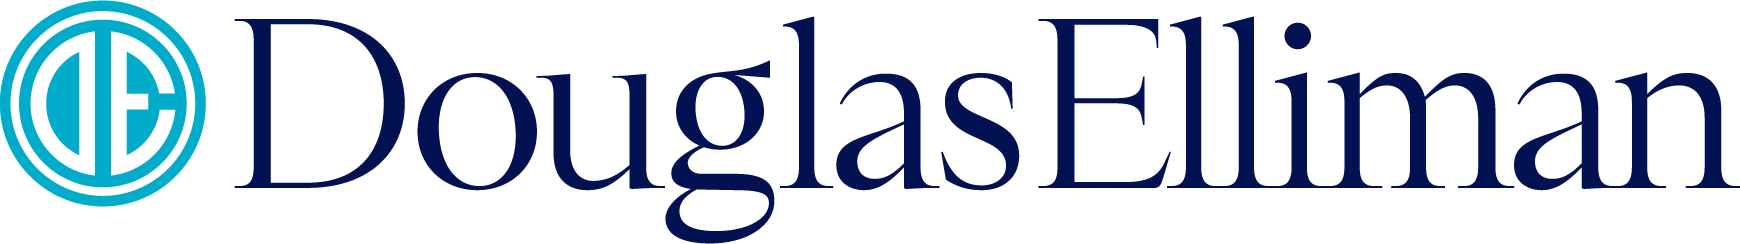 Logo of Douglas Elliman Real Estate